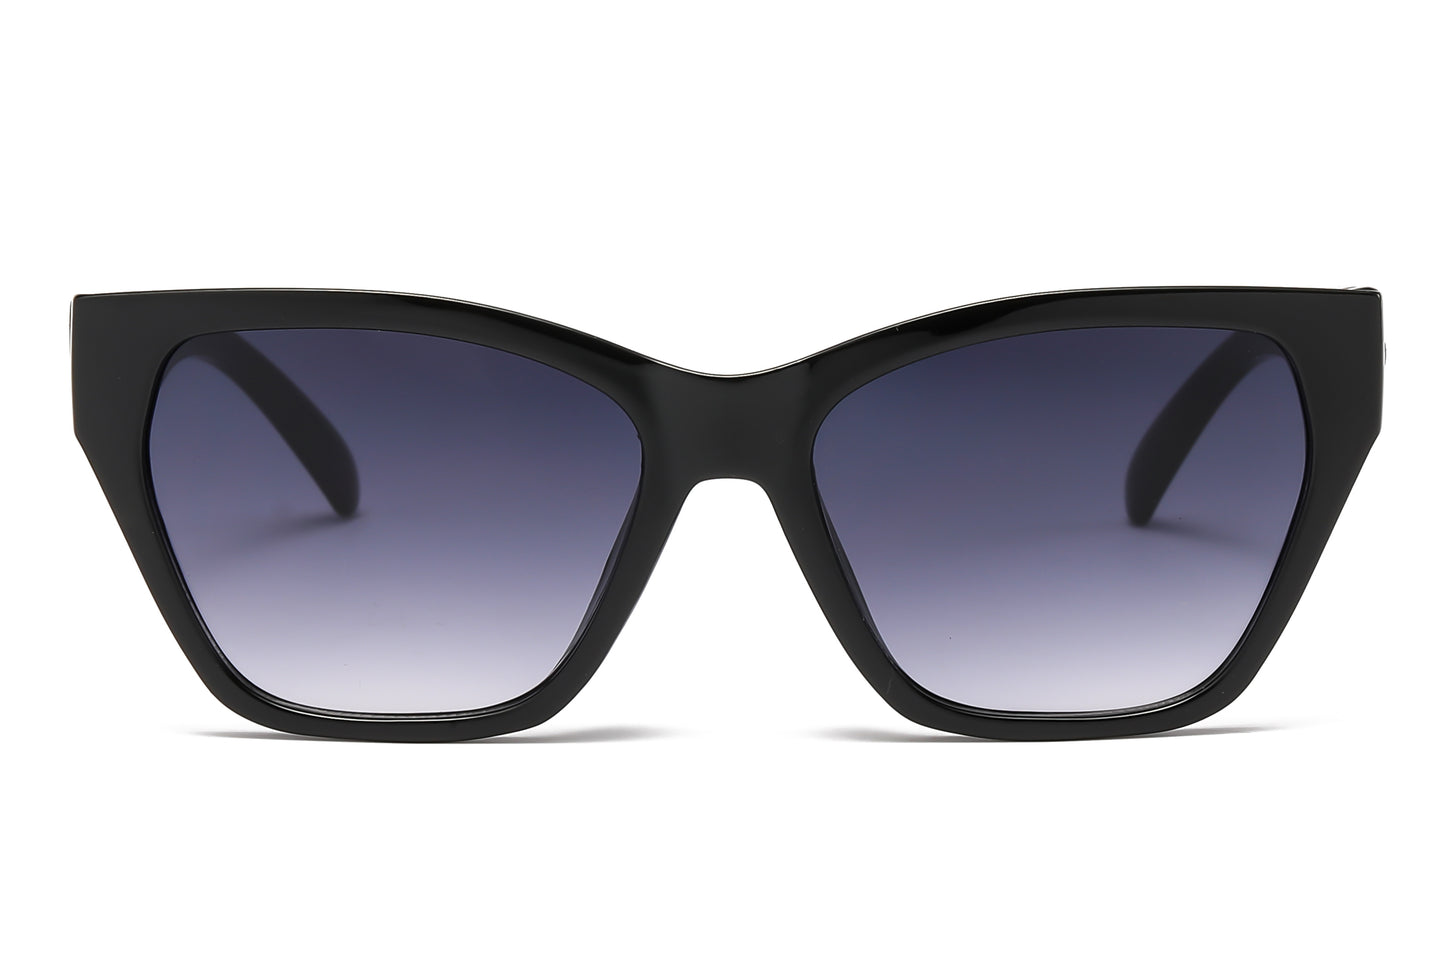 5245 - Cat Eye Fashion Plastic Sunglasses